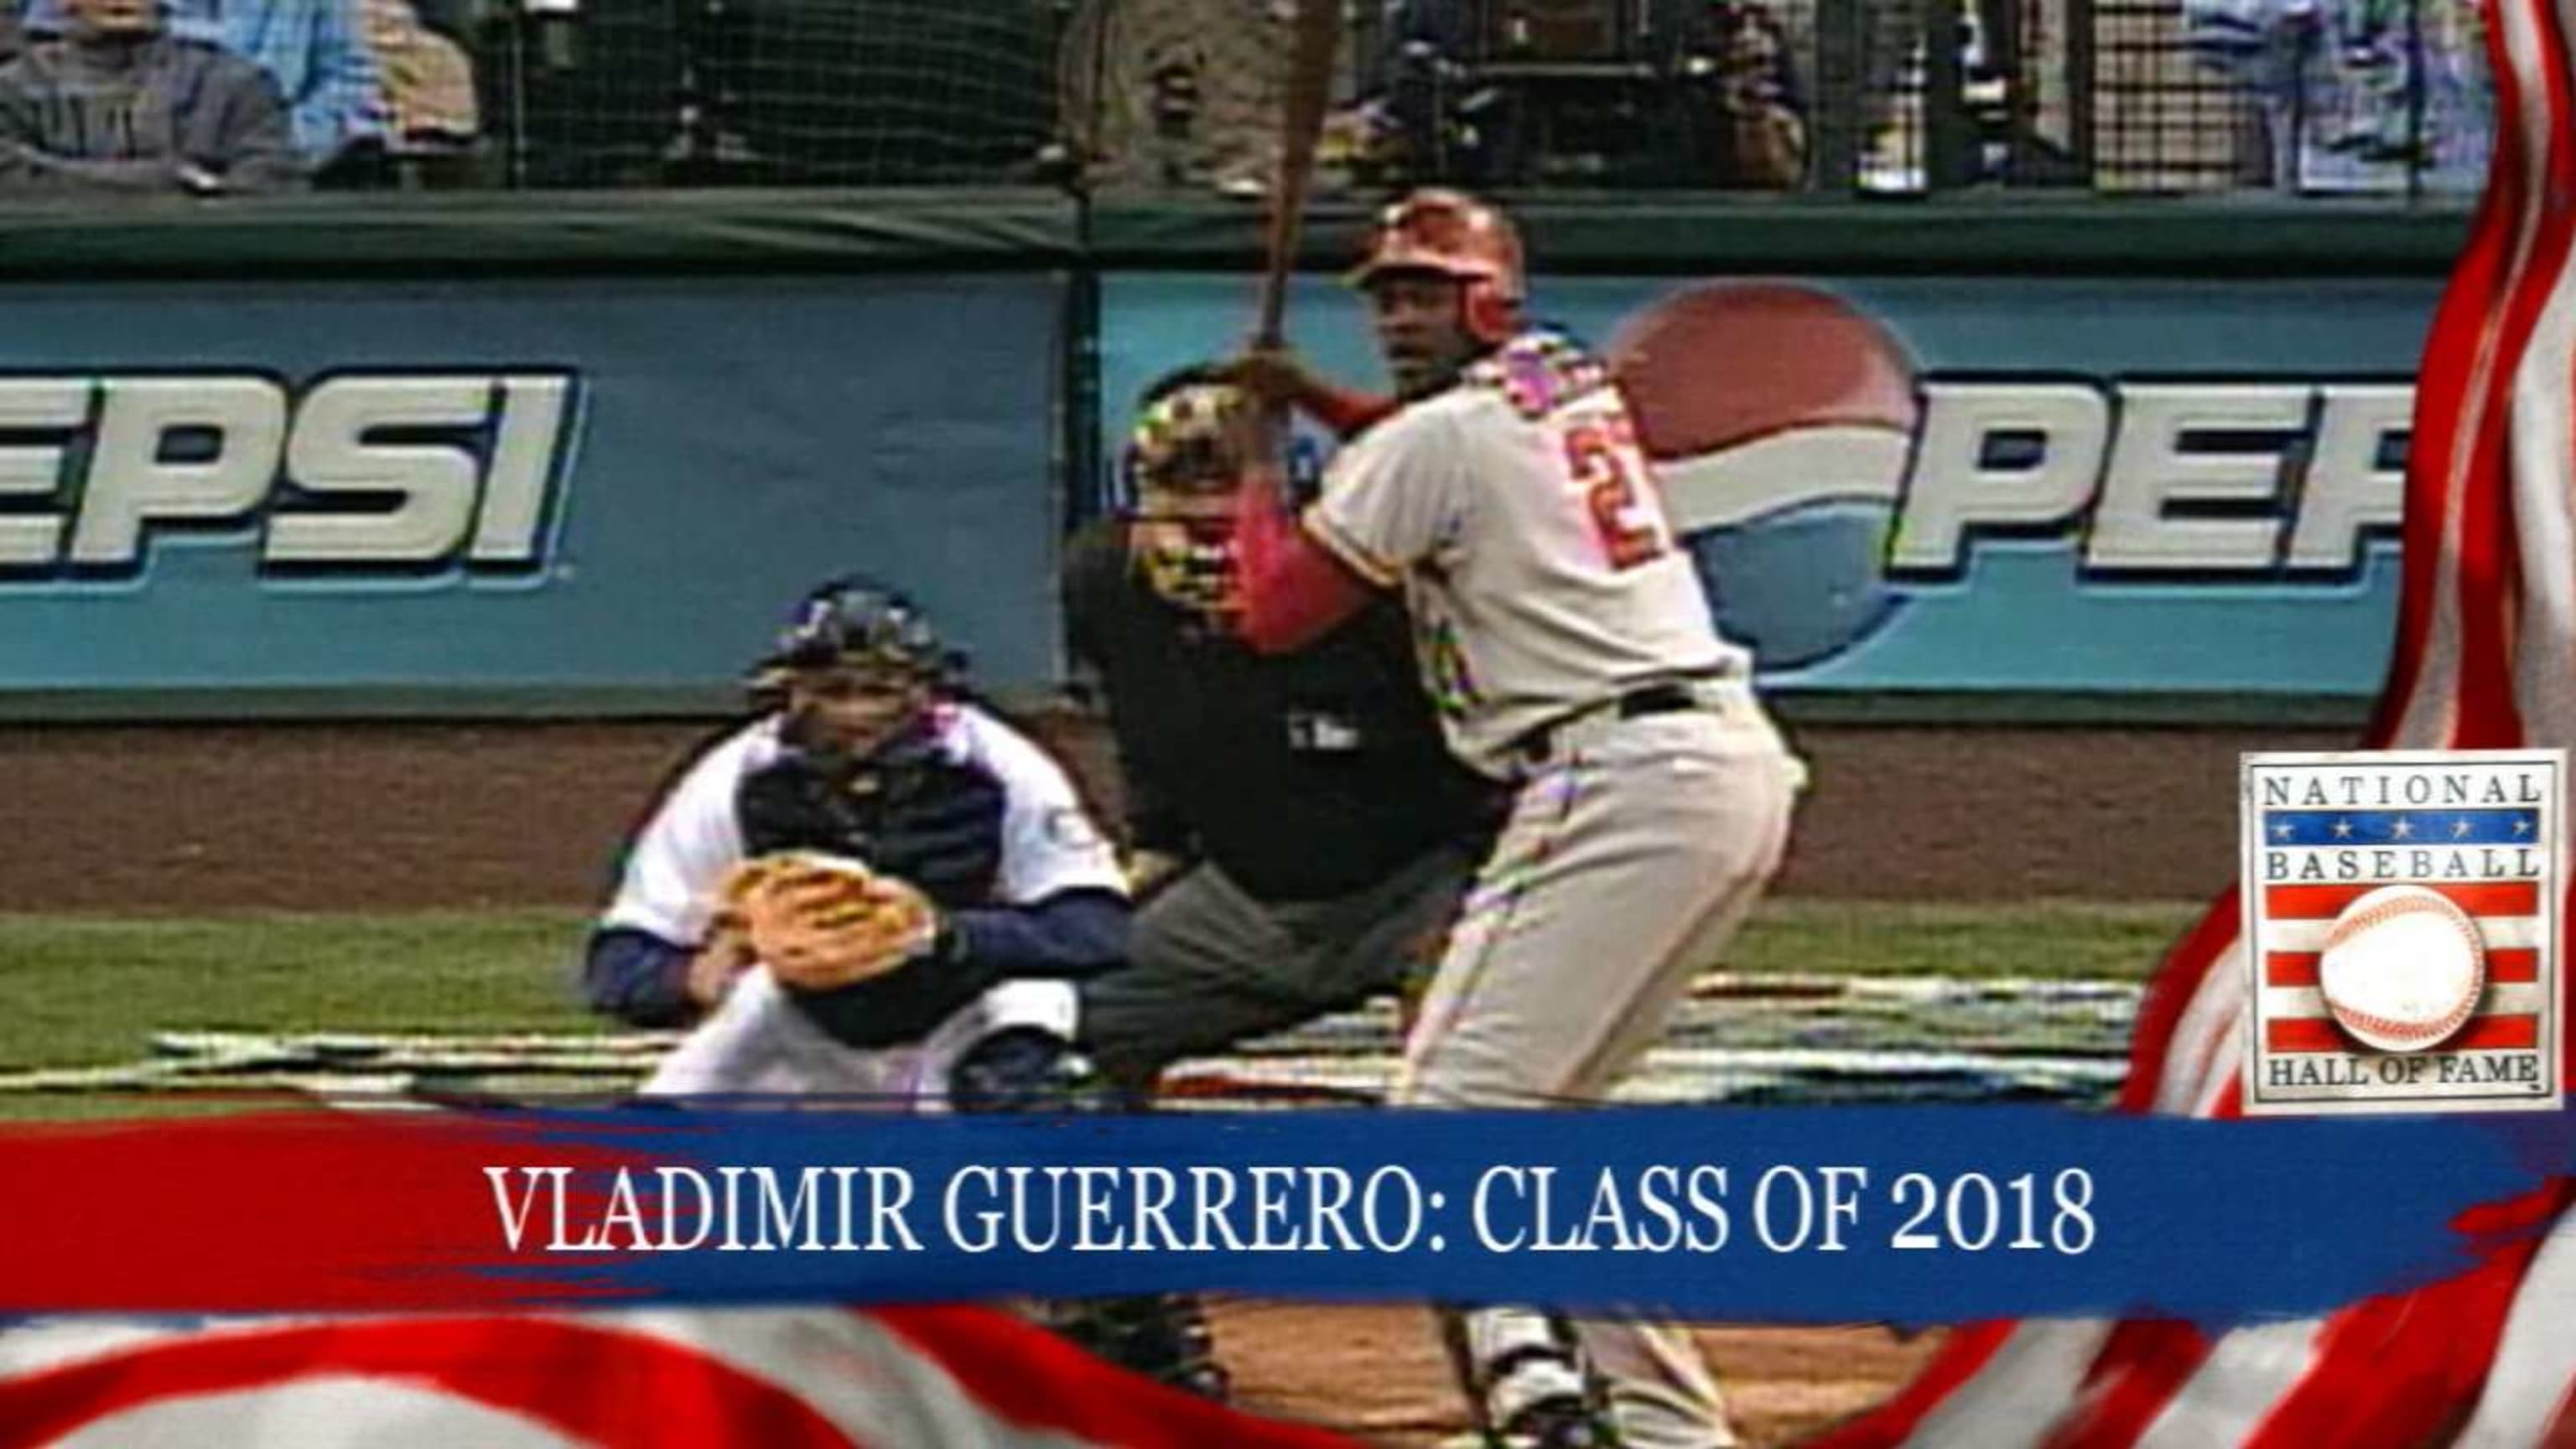 Guerrero, Vladimir  Baseball Hall of Fame